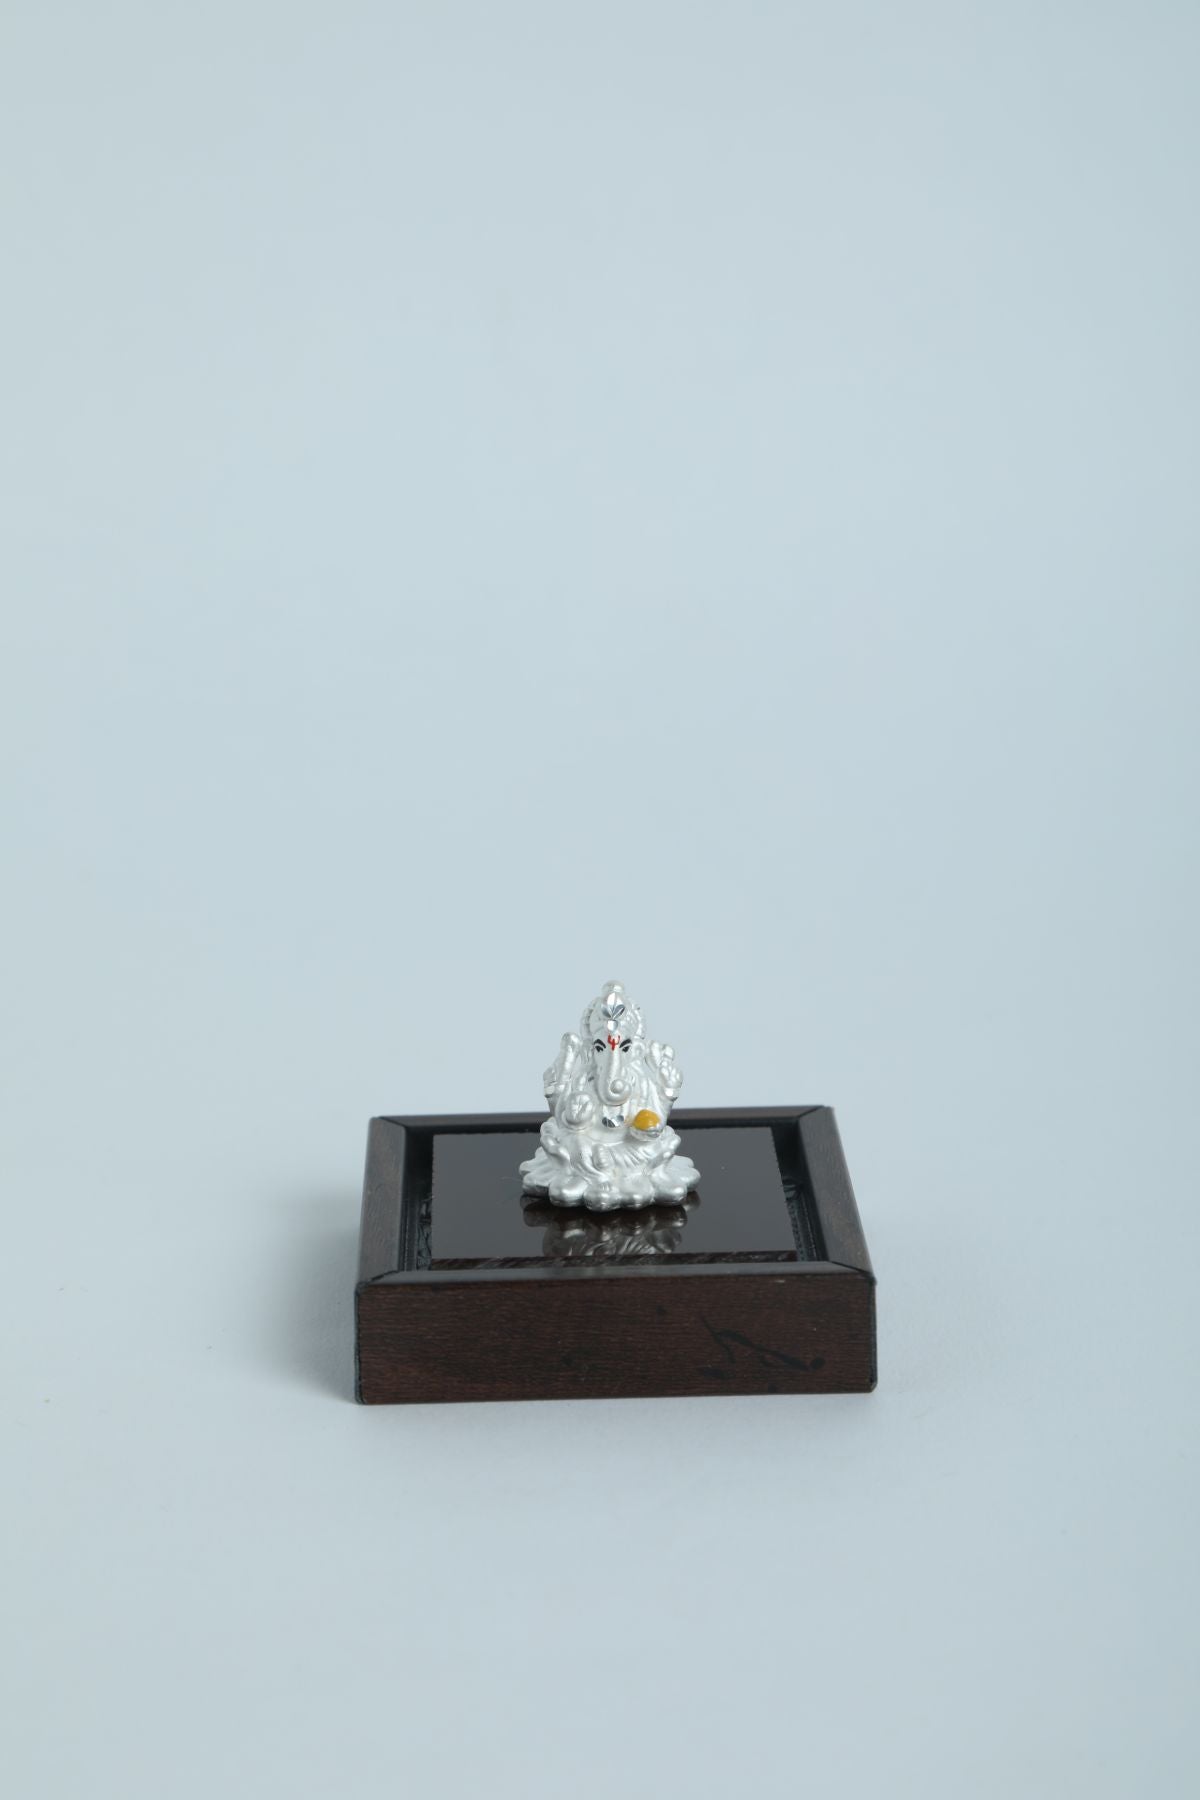 999 Pure Silver Ganesha Idol By Krysaliis Isvara - Krign_Ms18 Idols